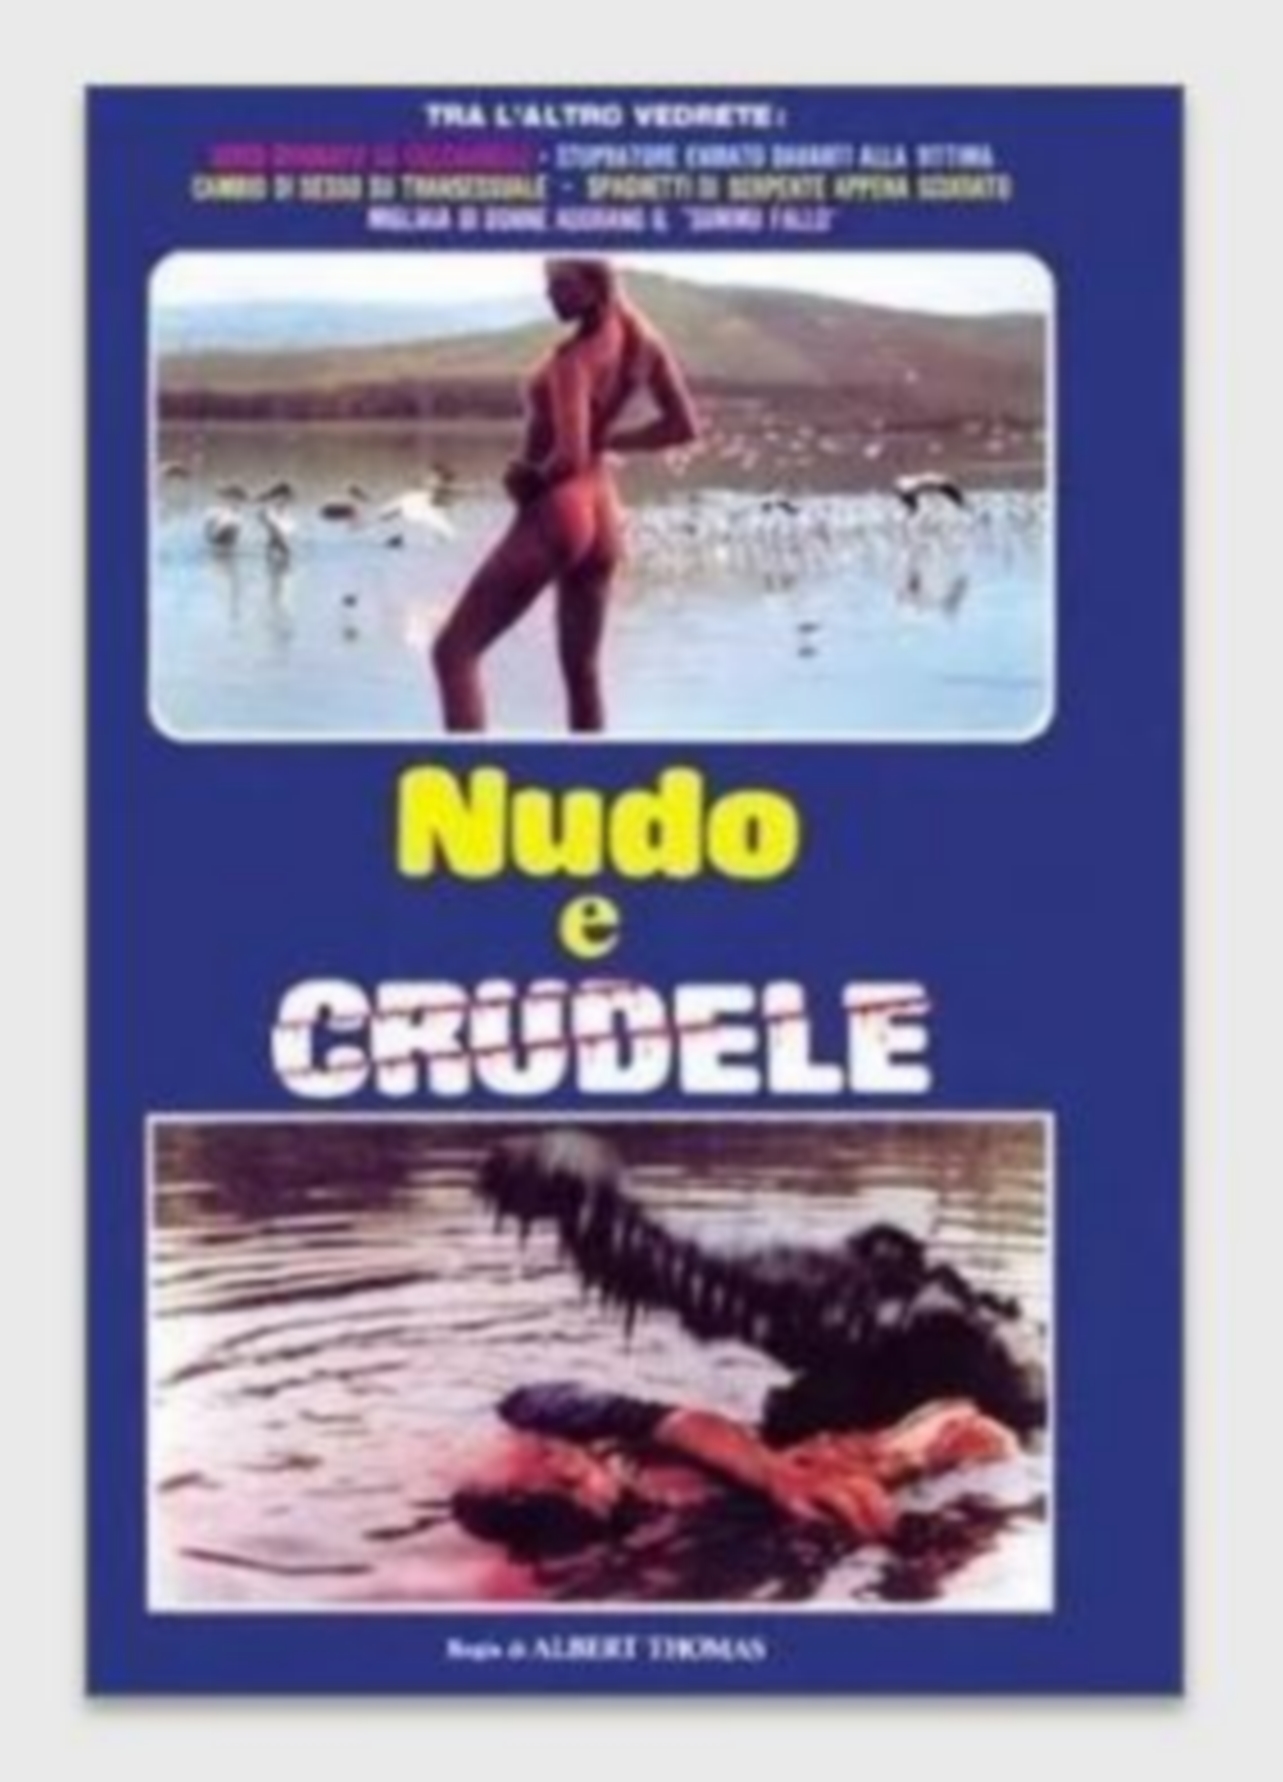 Nudo e crudele (1984) Screenshot 1 